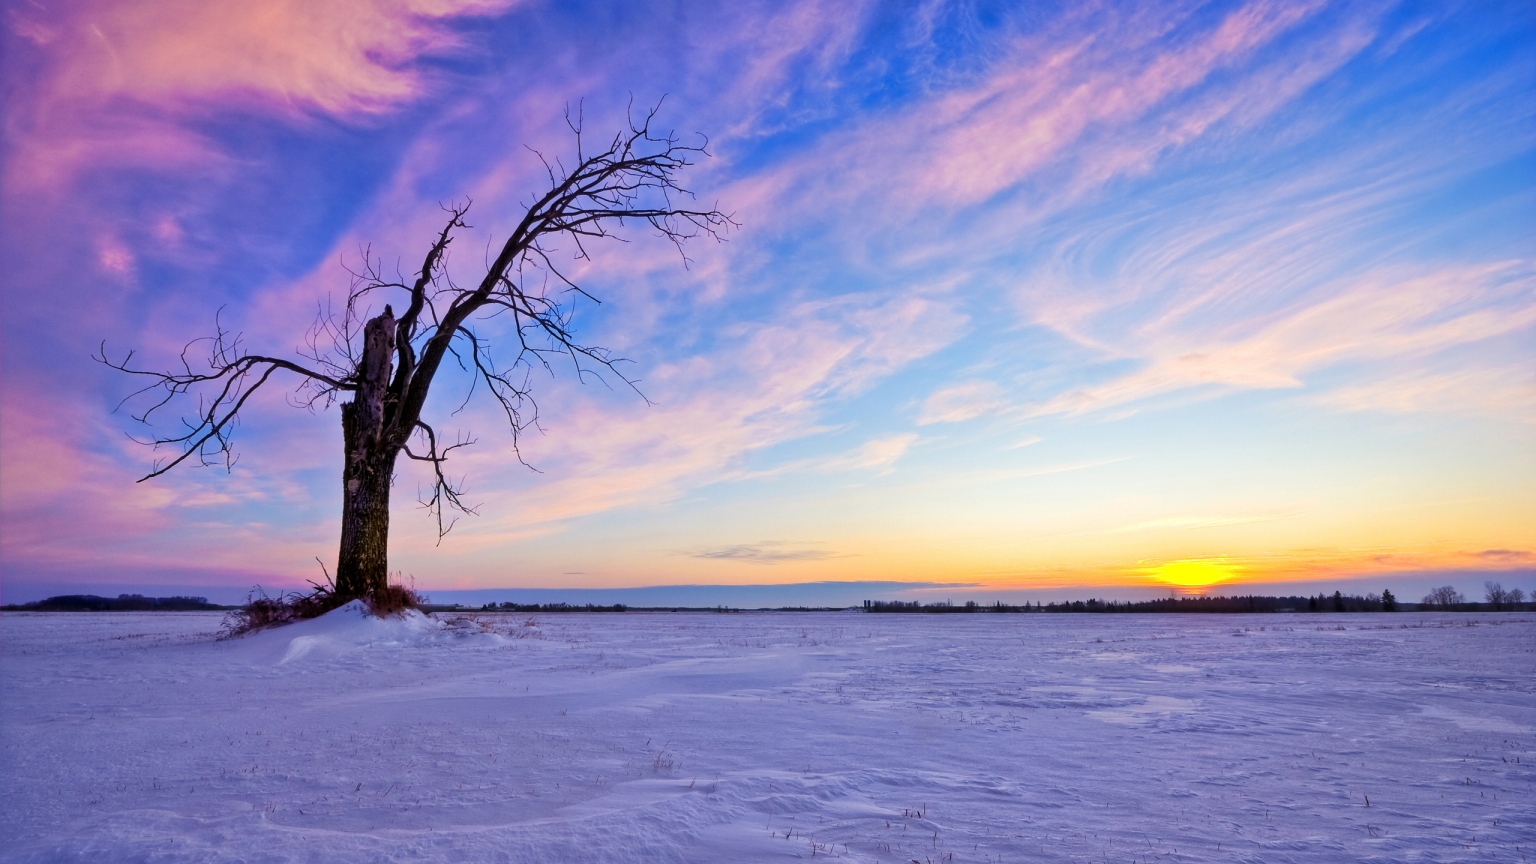 Beautiful Winter Sunset for 1536 x 864 HDTV resolution